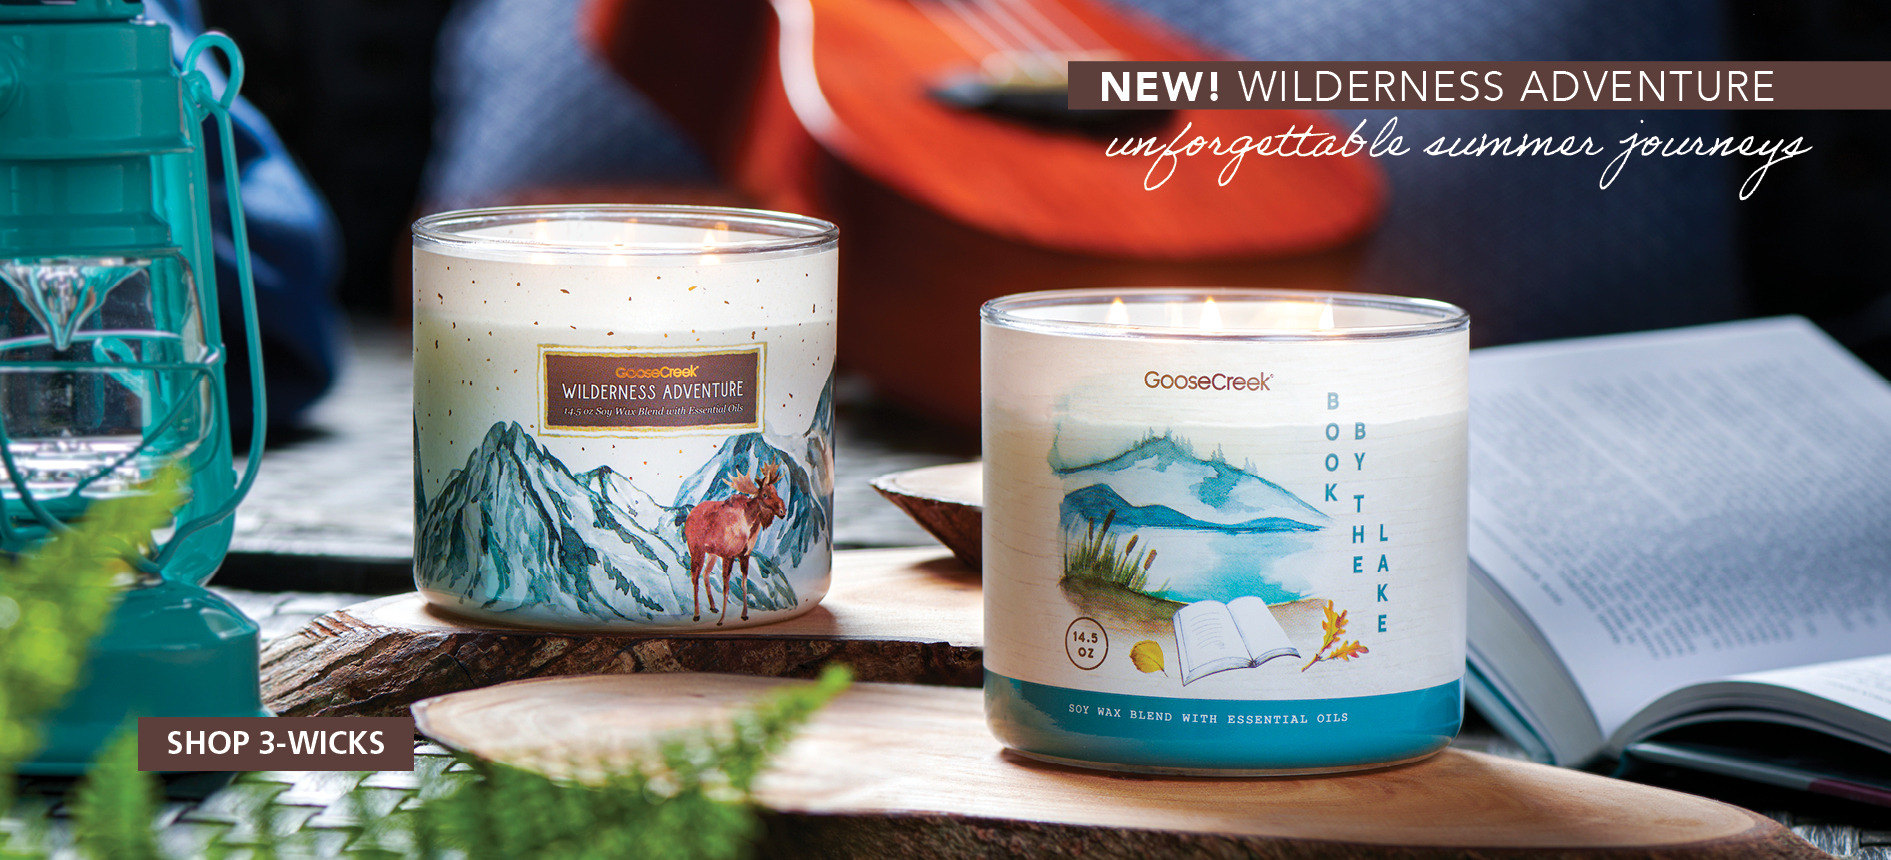 Wilderness adventure 3-wick candles